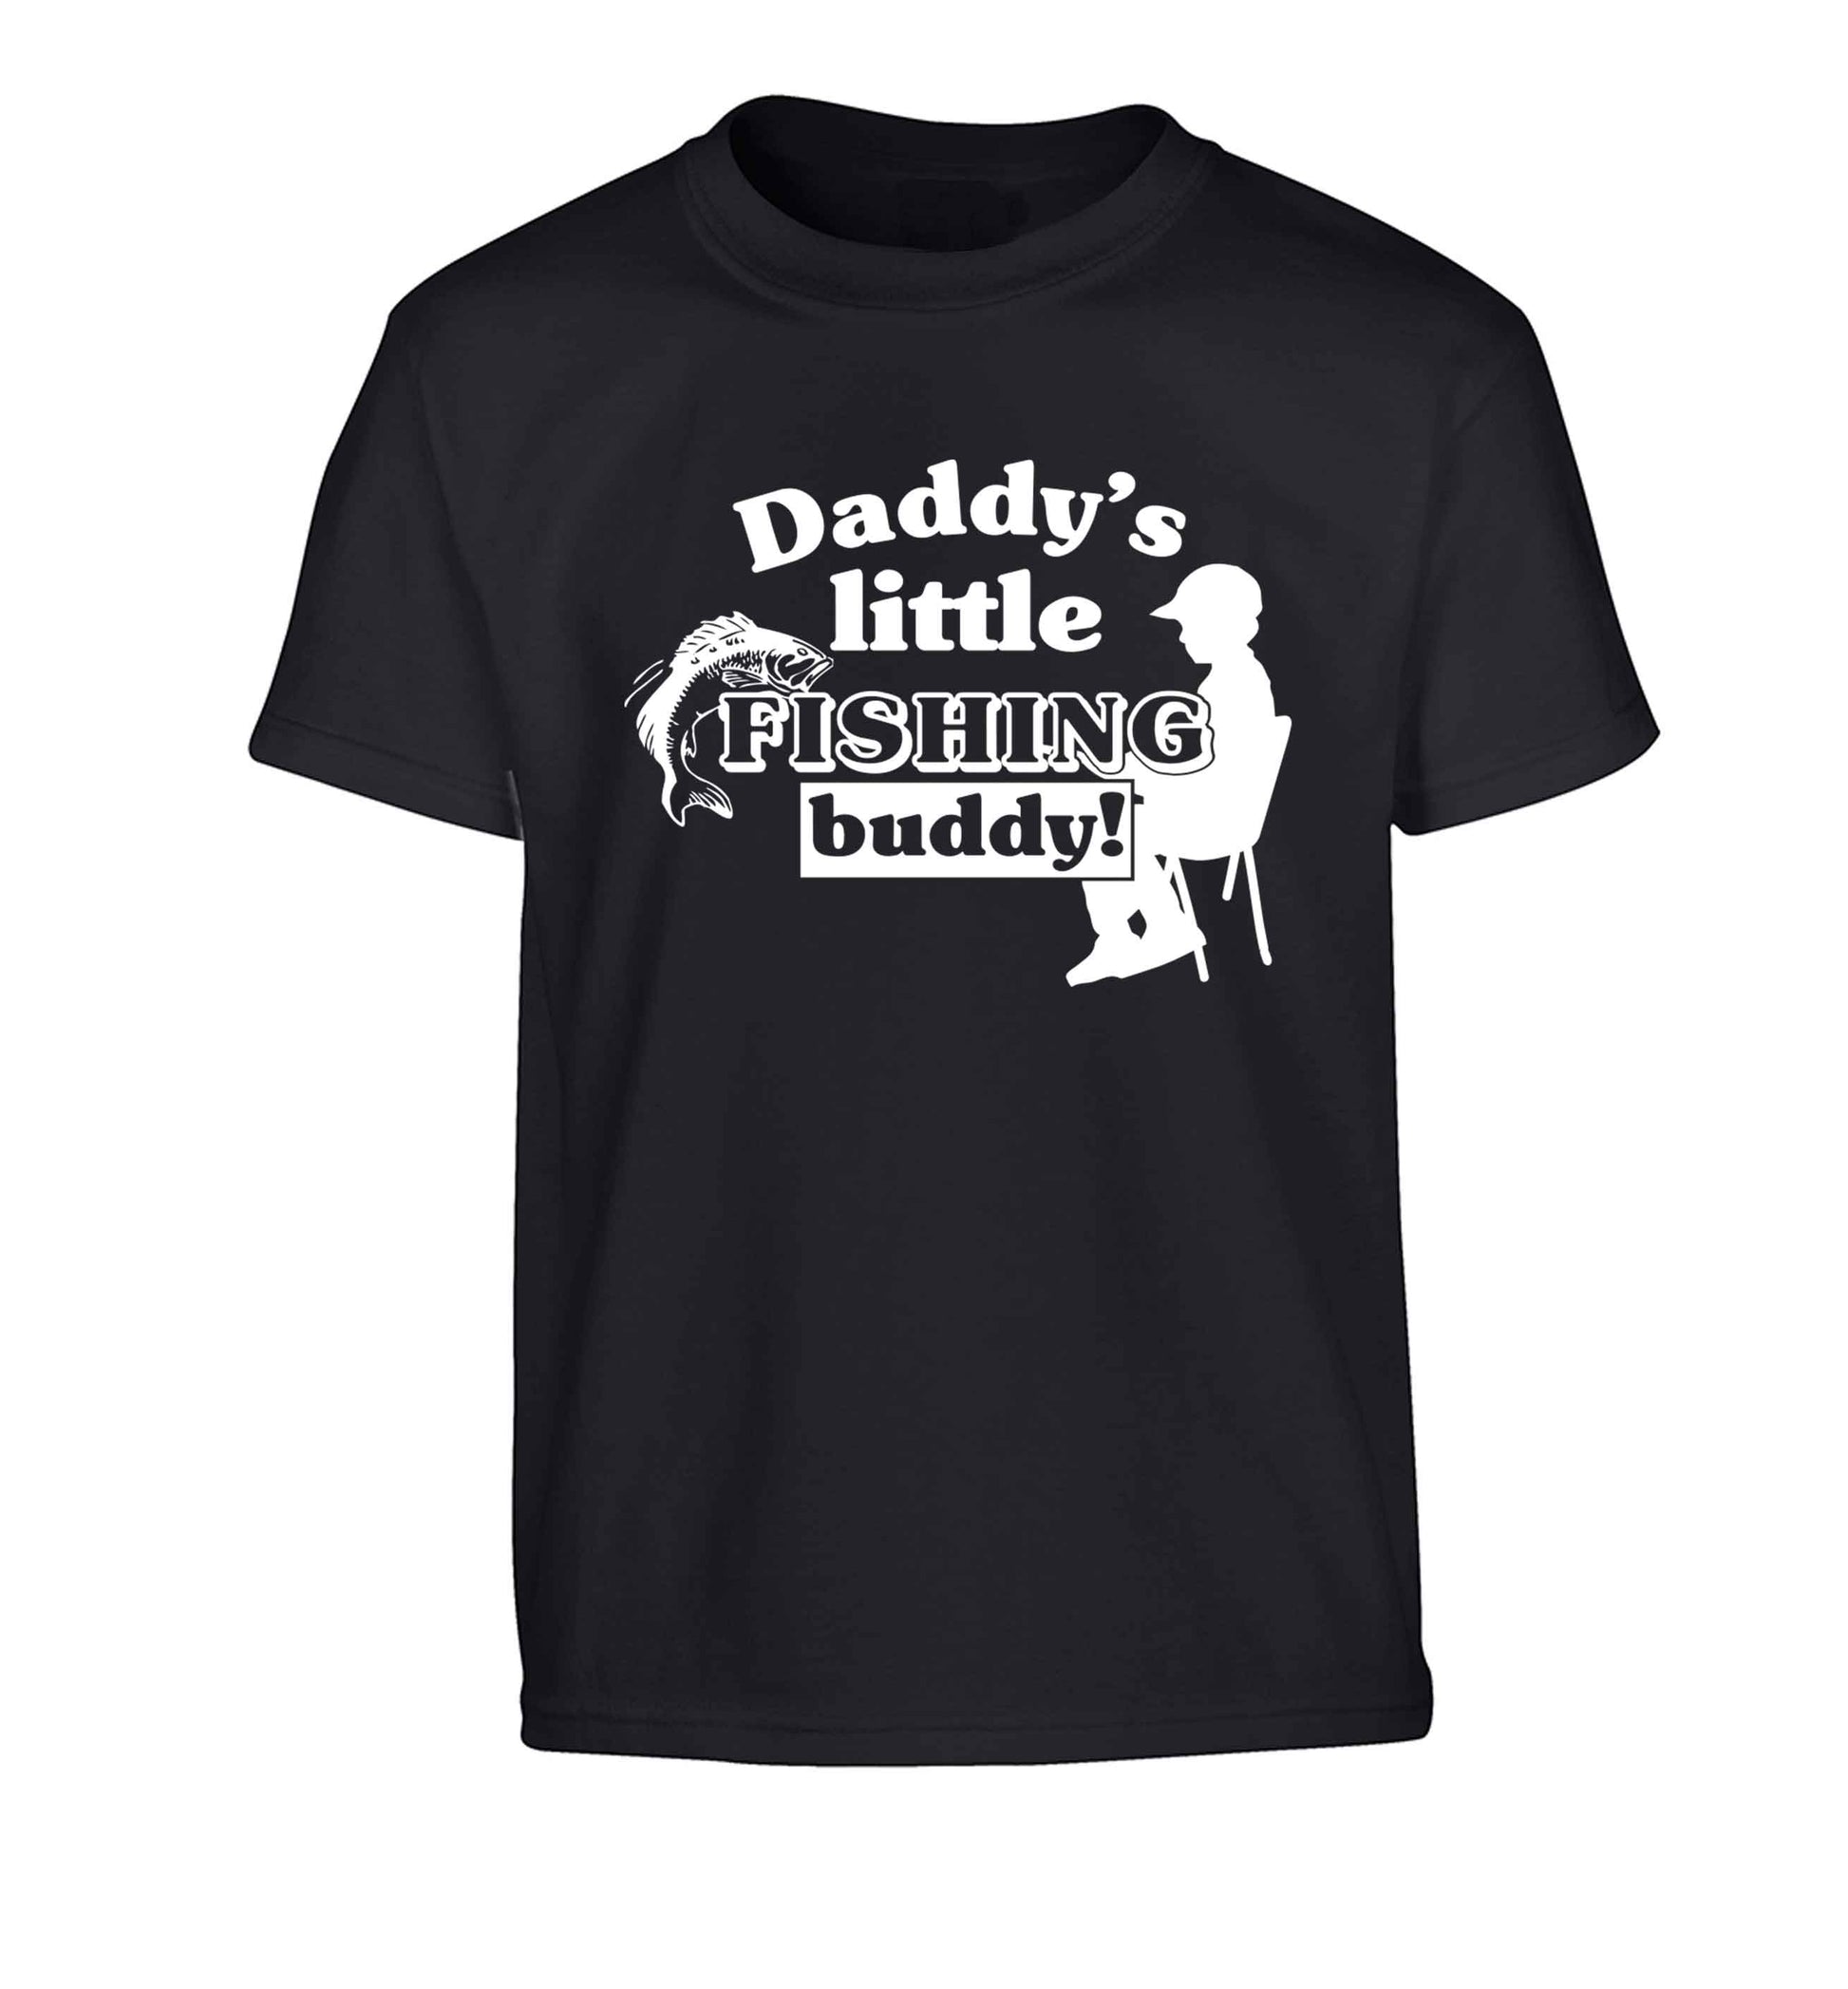 Daddy's little fishing buddy Children's black Tshirt 12-13 Years